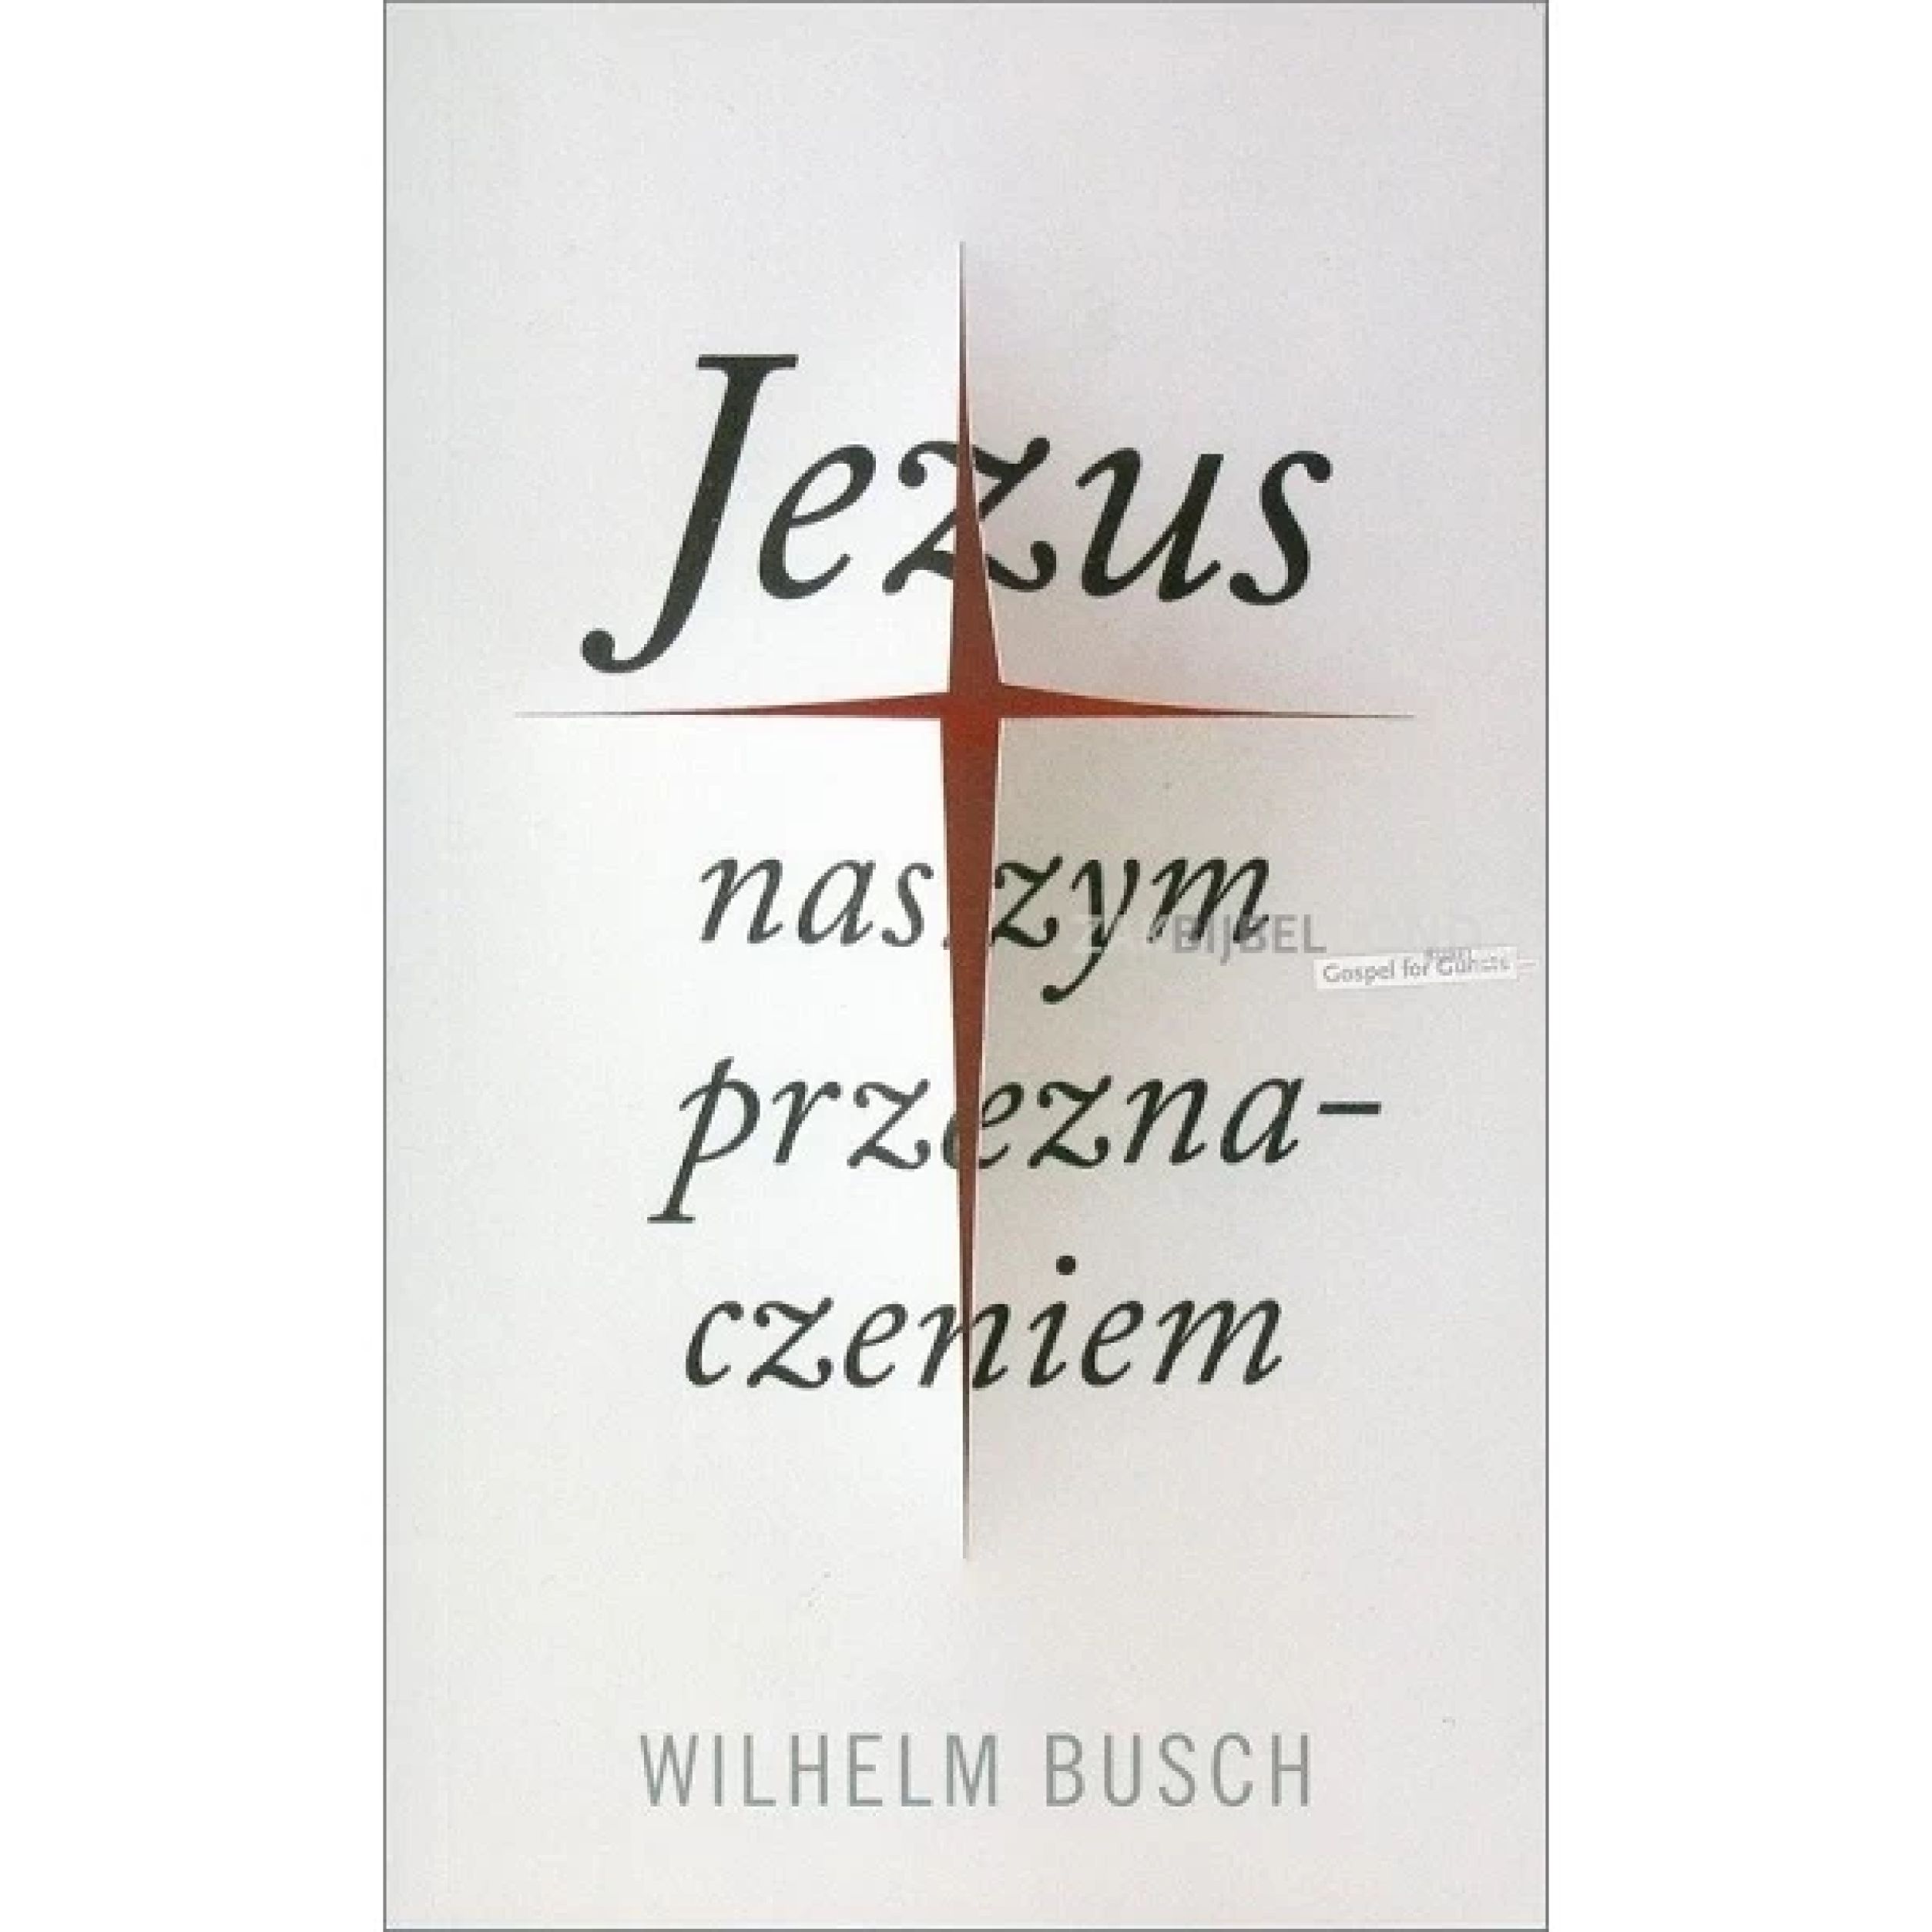 Pools, Jezus, onze bestemming, W. Busch - verkorte uitgave